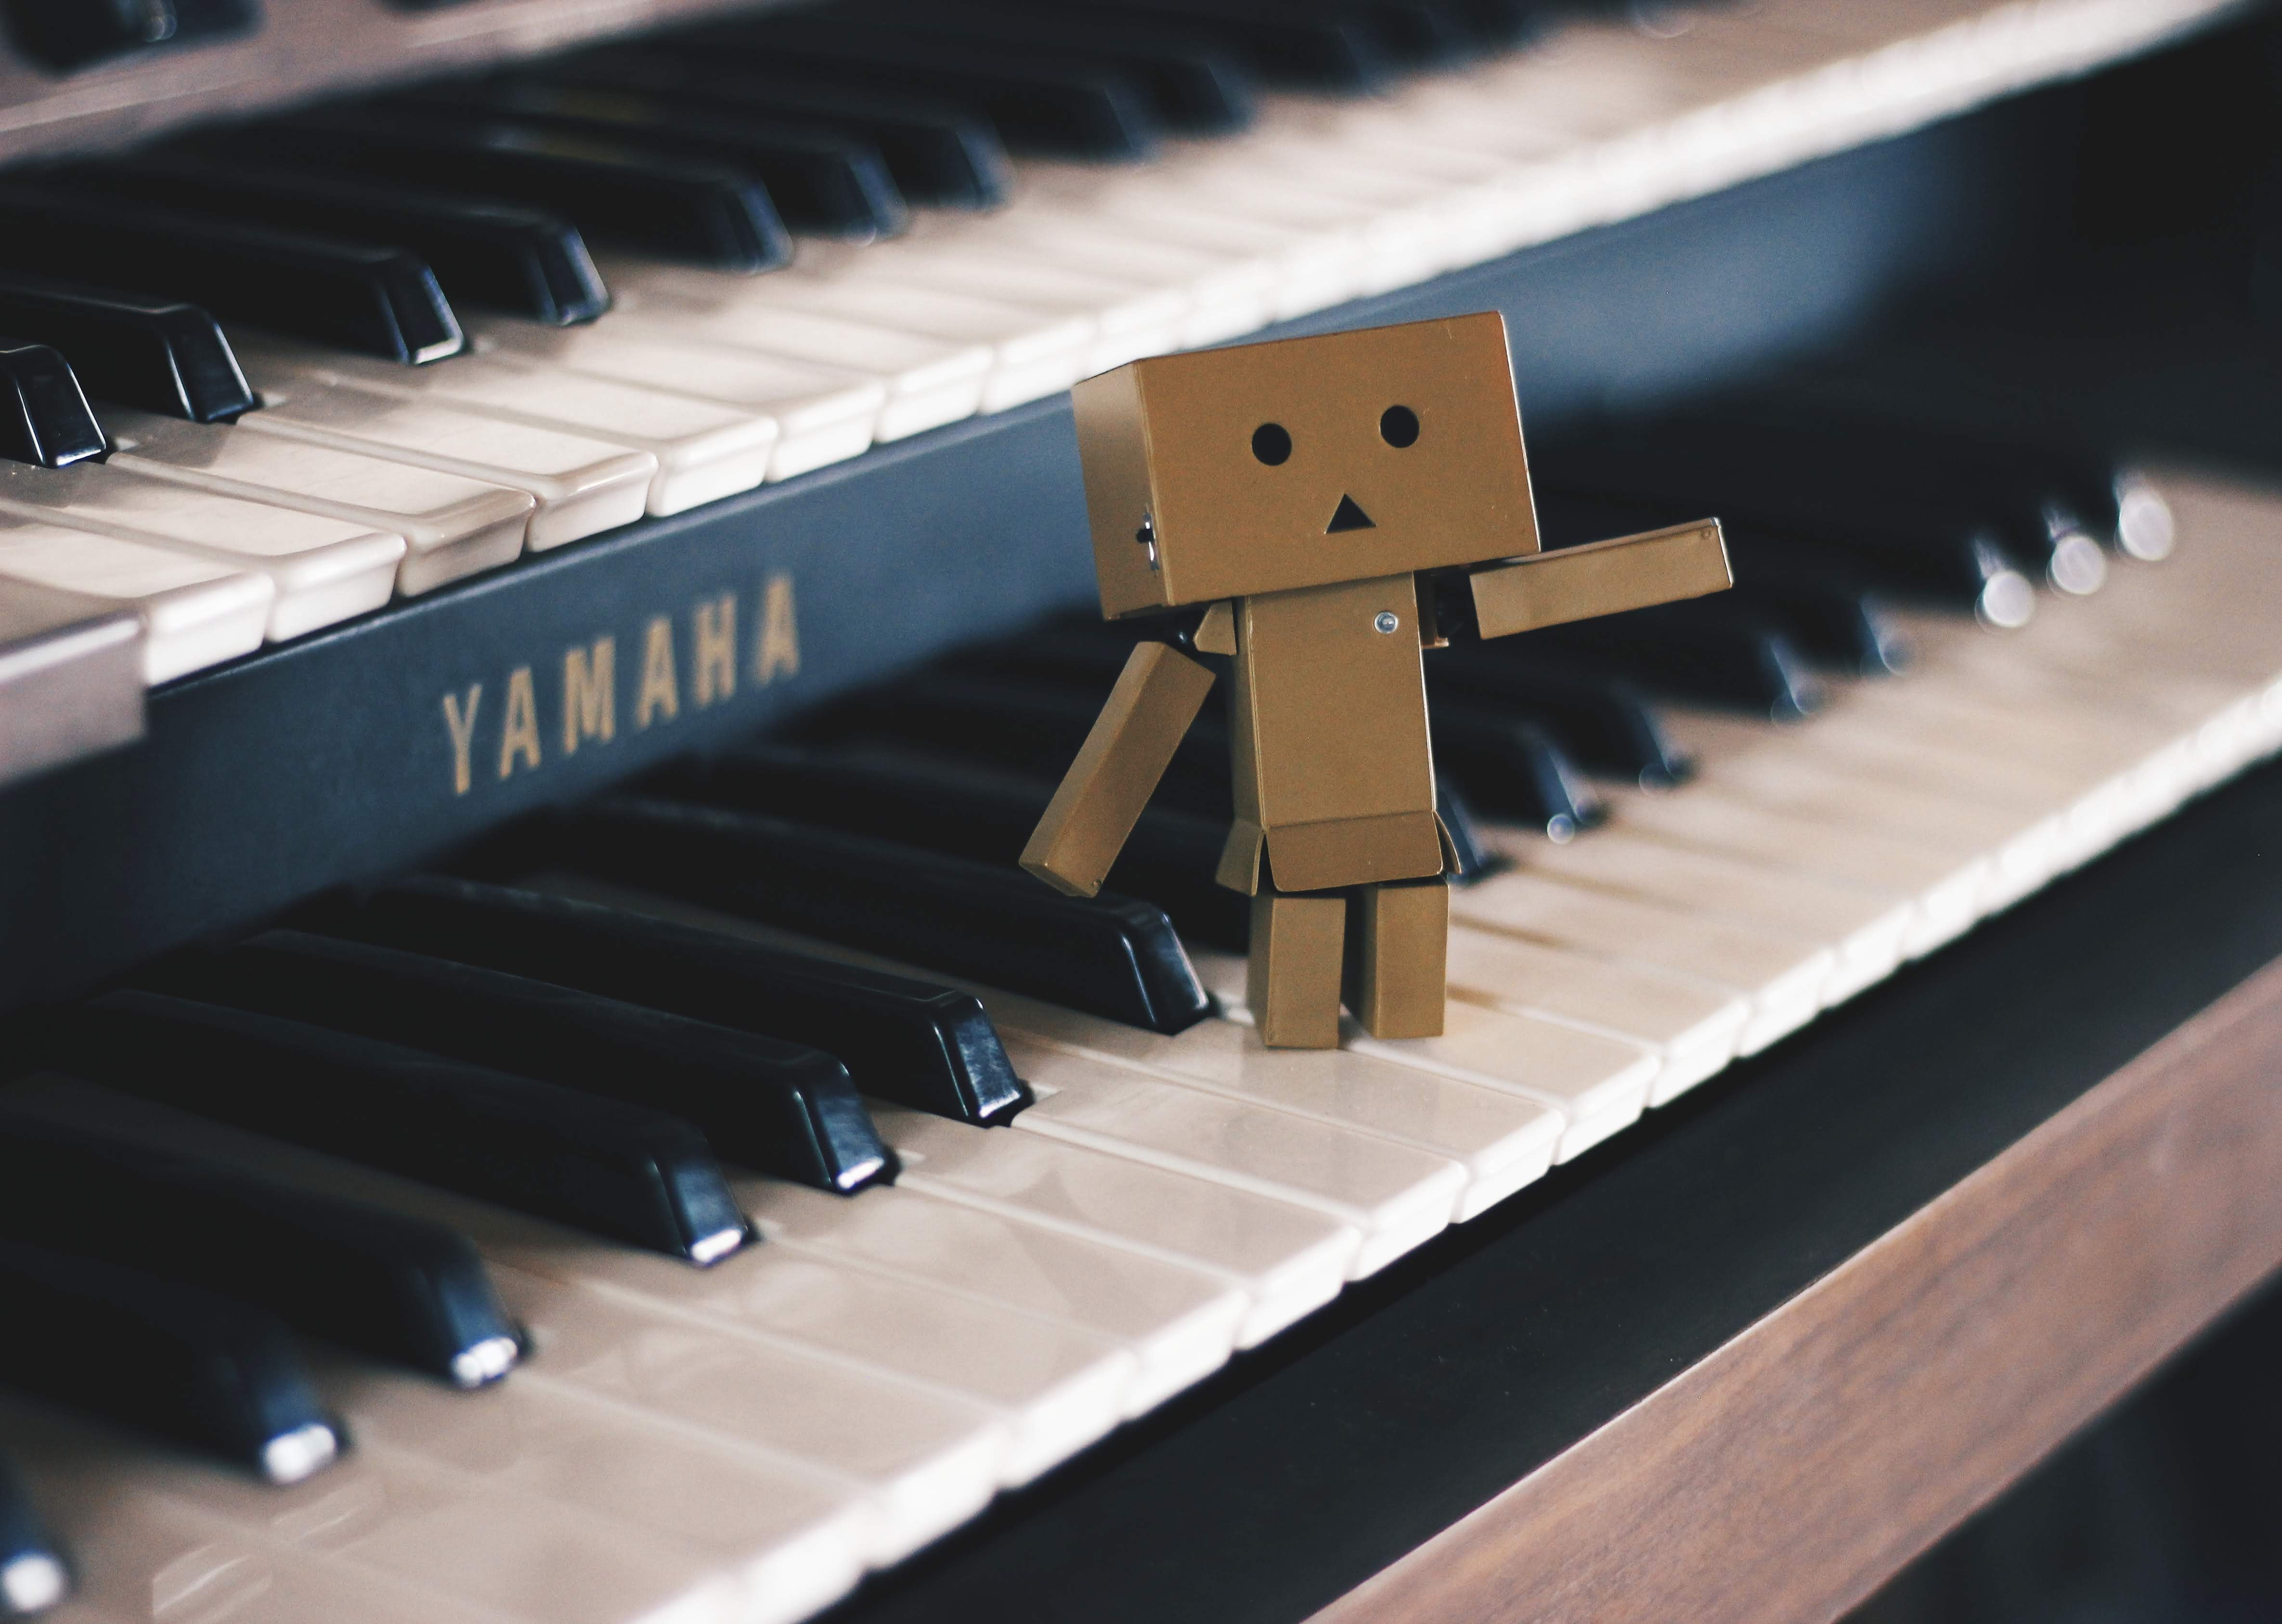 Danbo on a Yamaha Organ